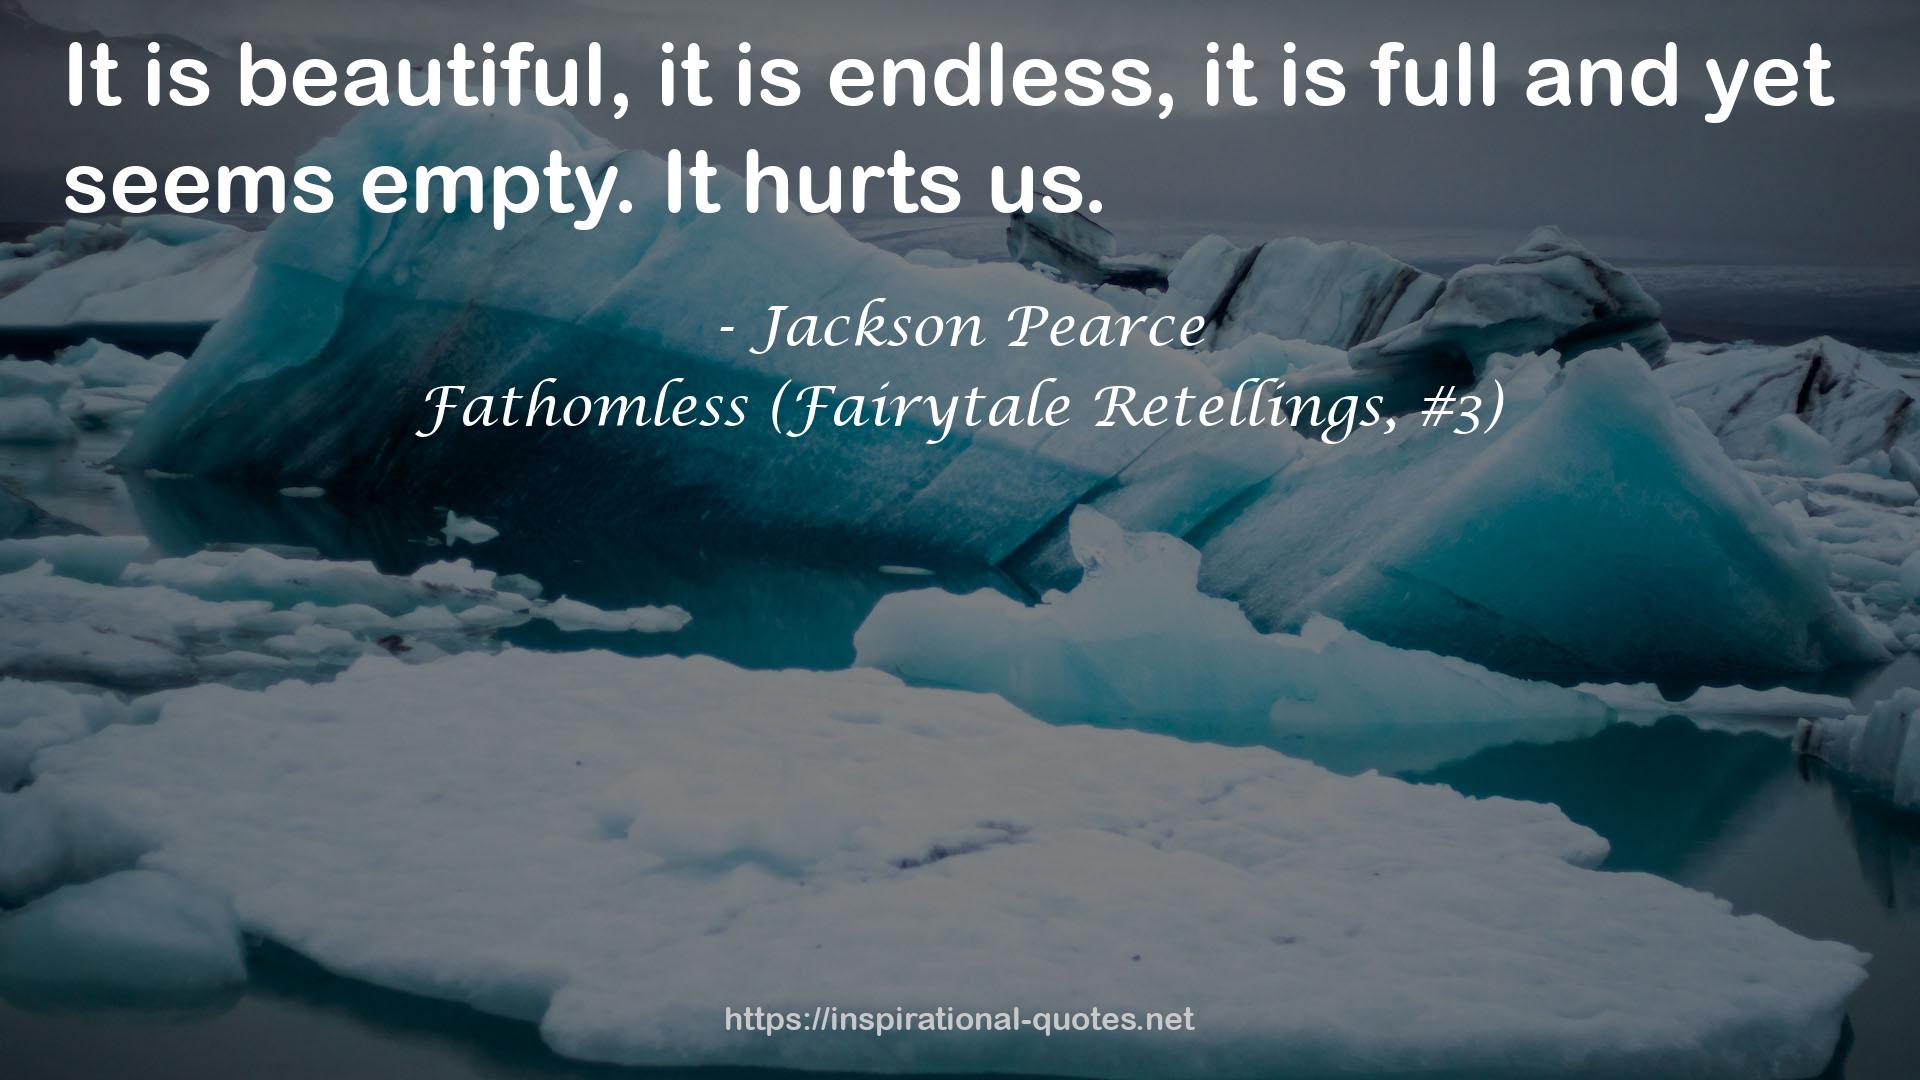 Fathomless (Fairytale Retellings, #3) QUOTES